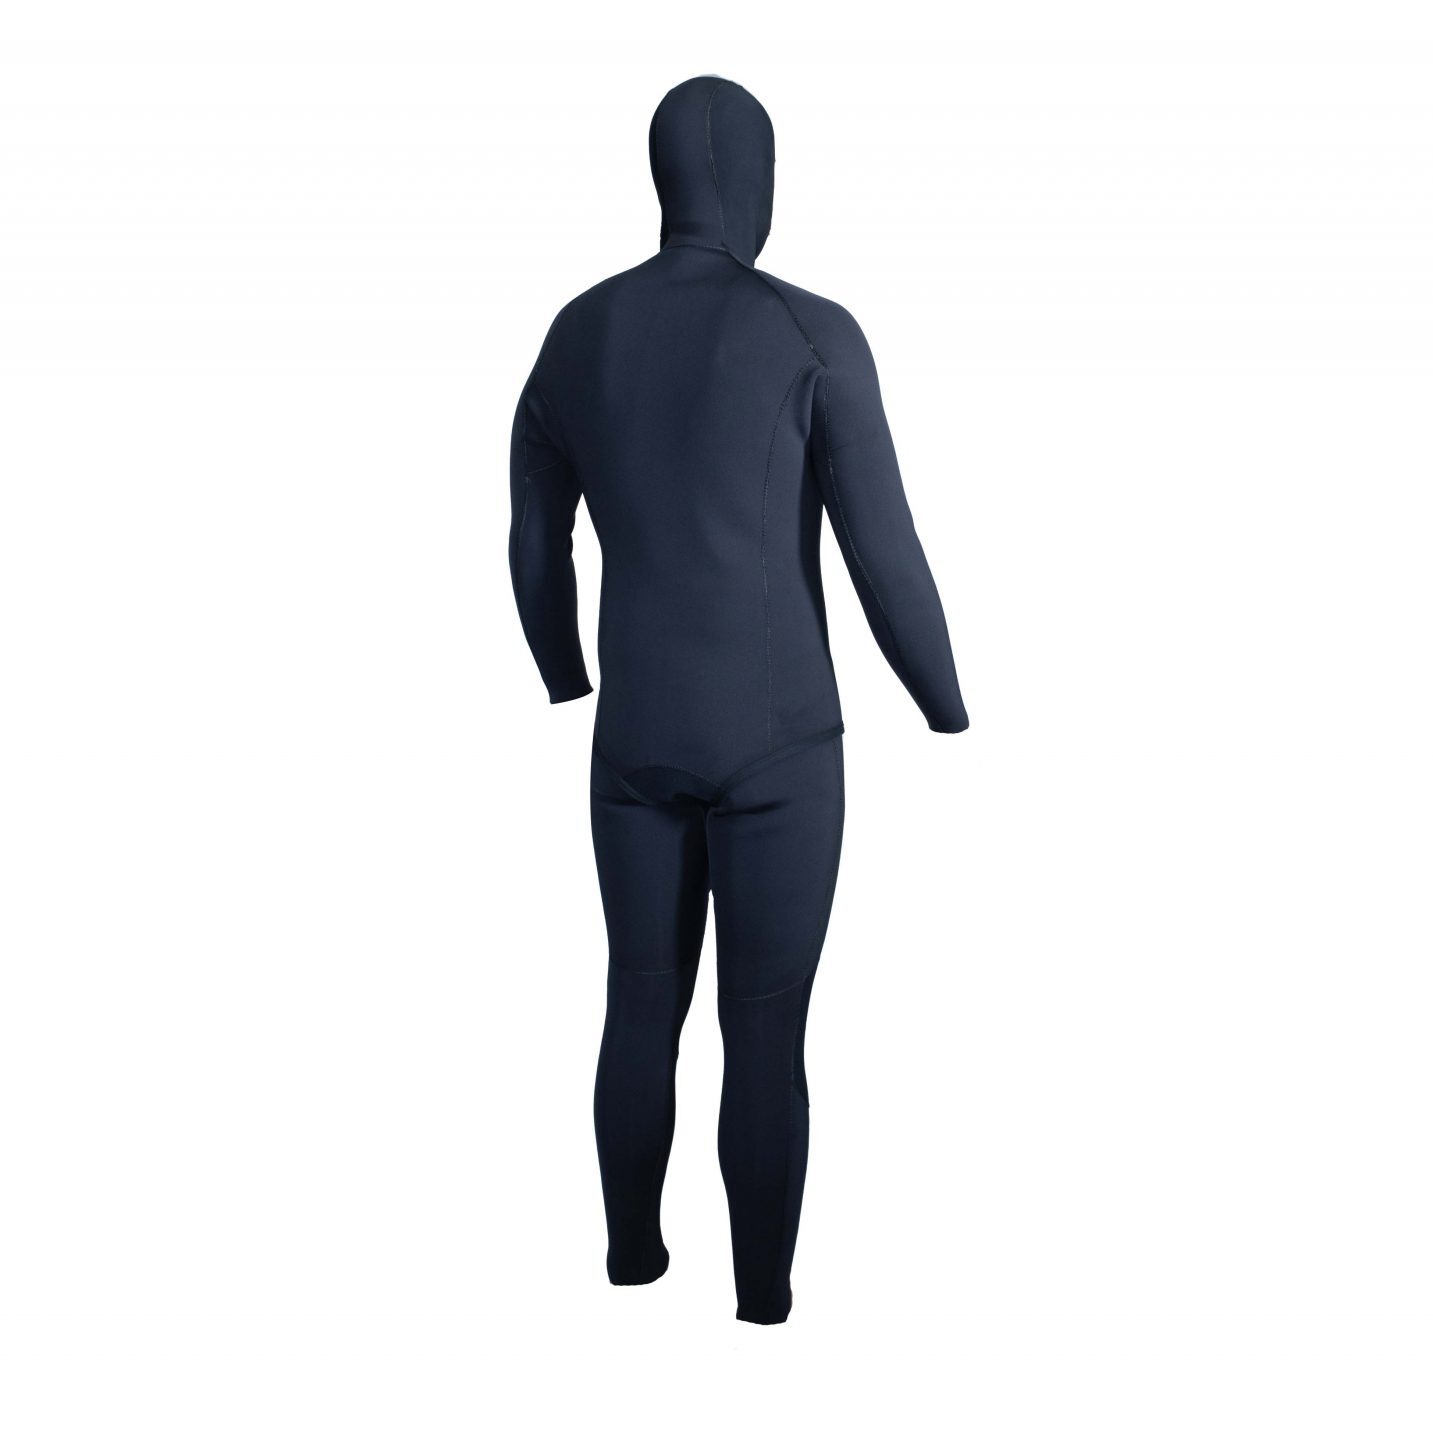 Rob Allen Custom Suit – 5mm Black Nylon